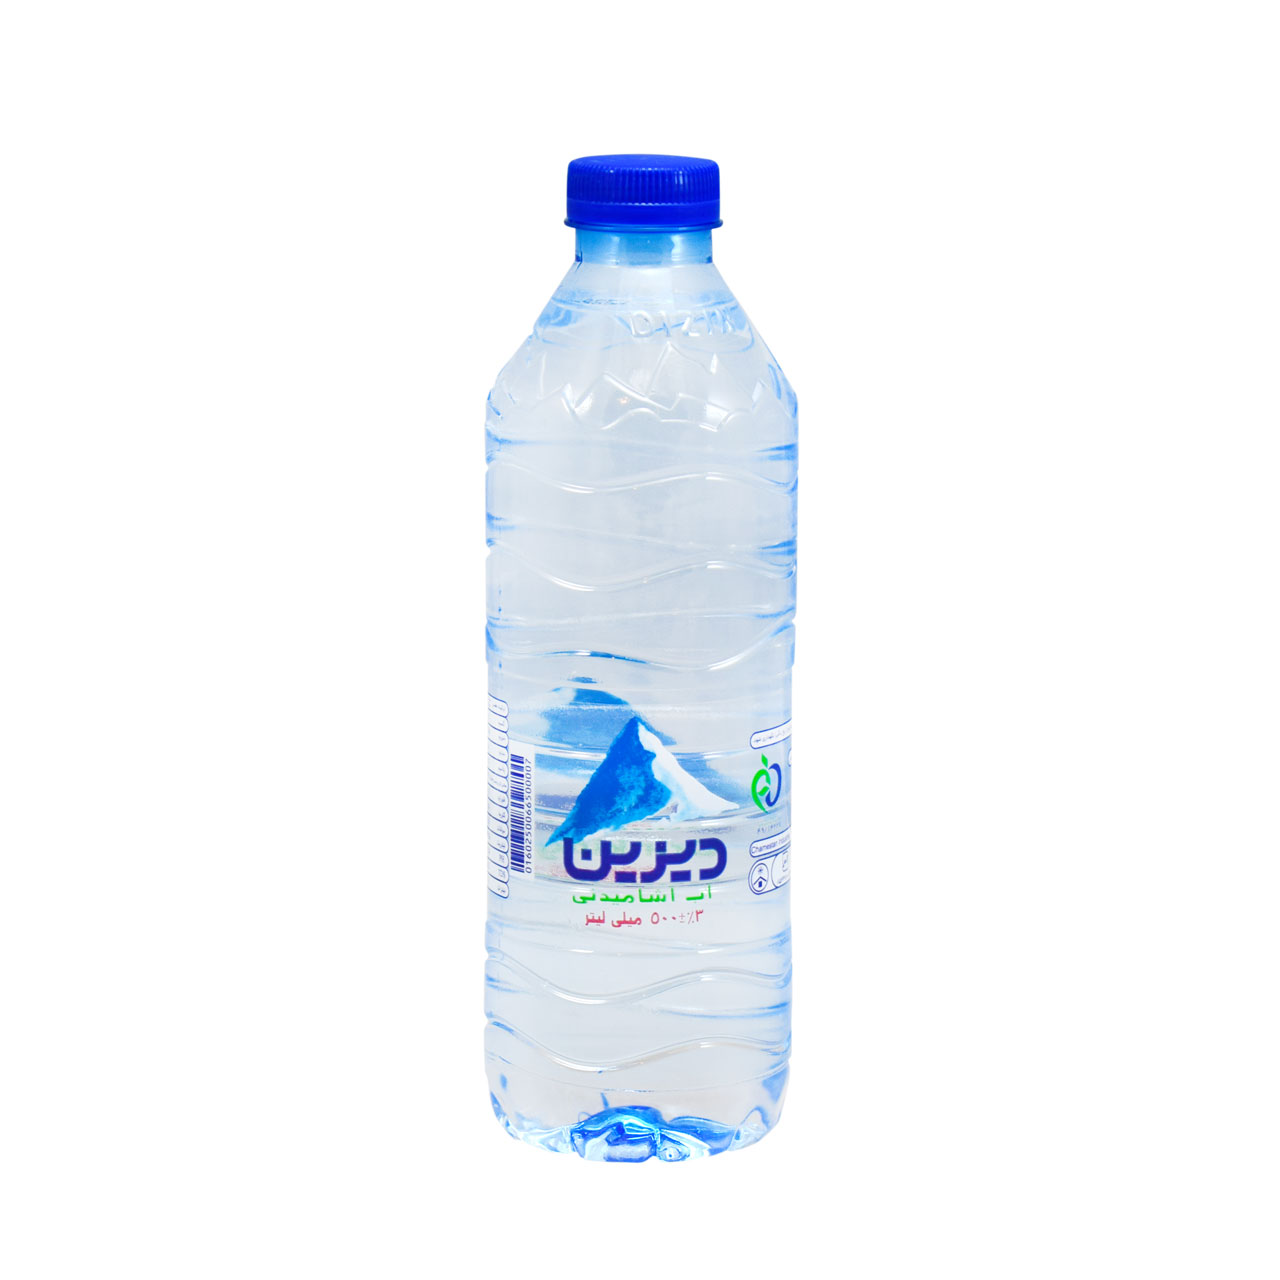 Drinking water 500 cc dizin